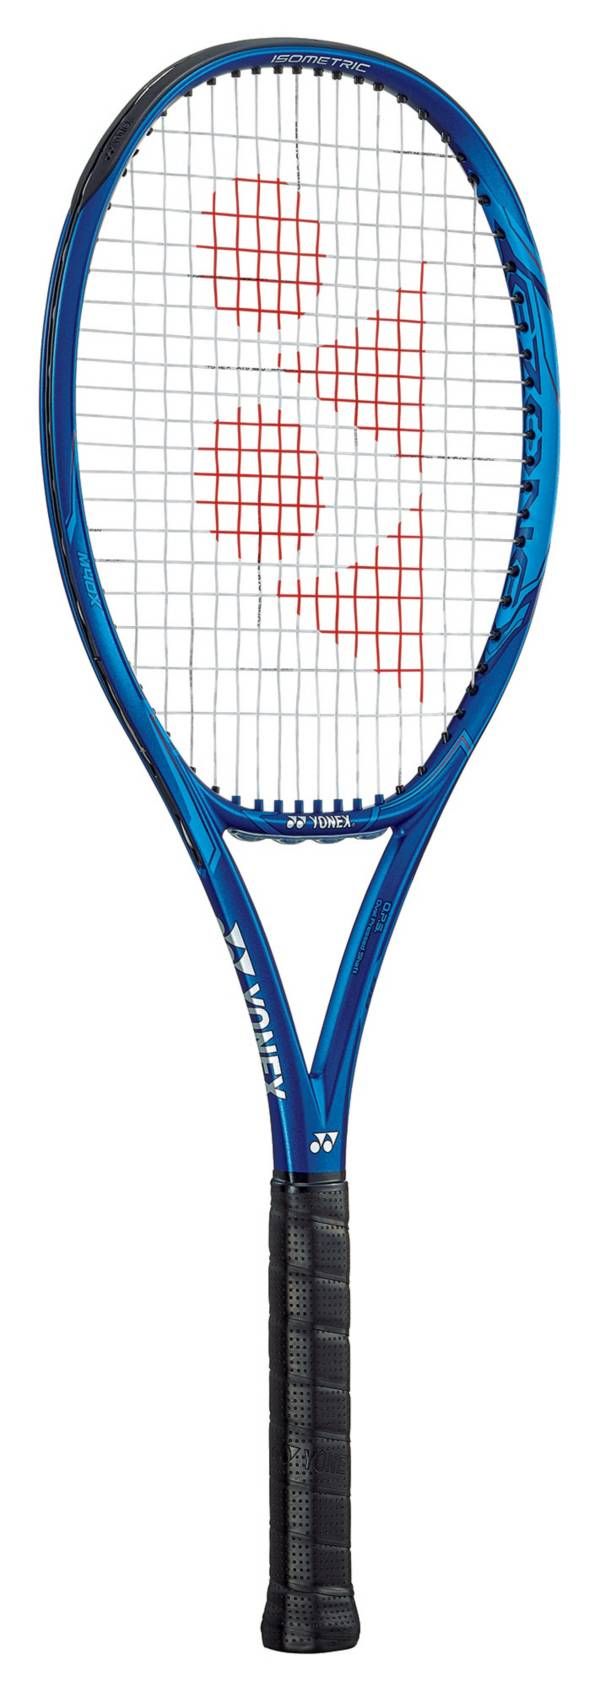 Yonex 2020 6th Generation Ezone 98 Tennis Racquet | Dick's Sporting Goods | Dick's Sporting Goods